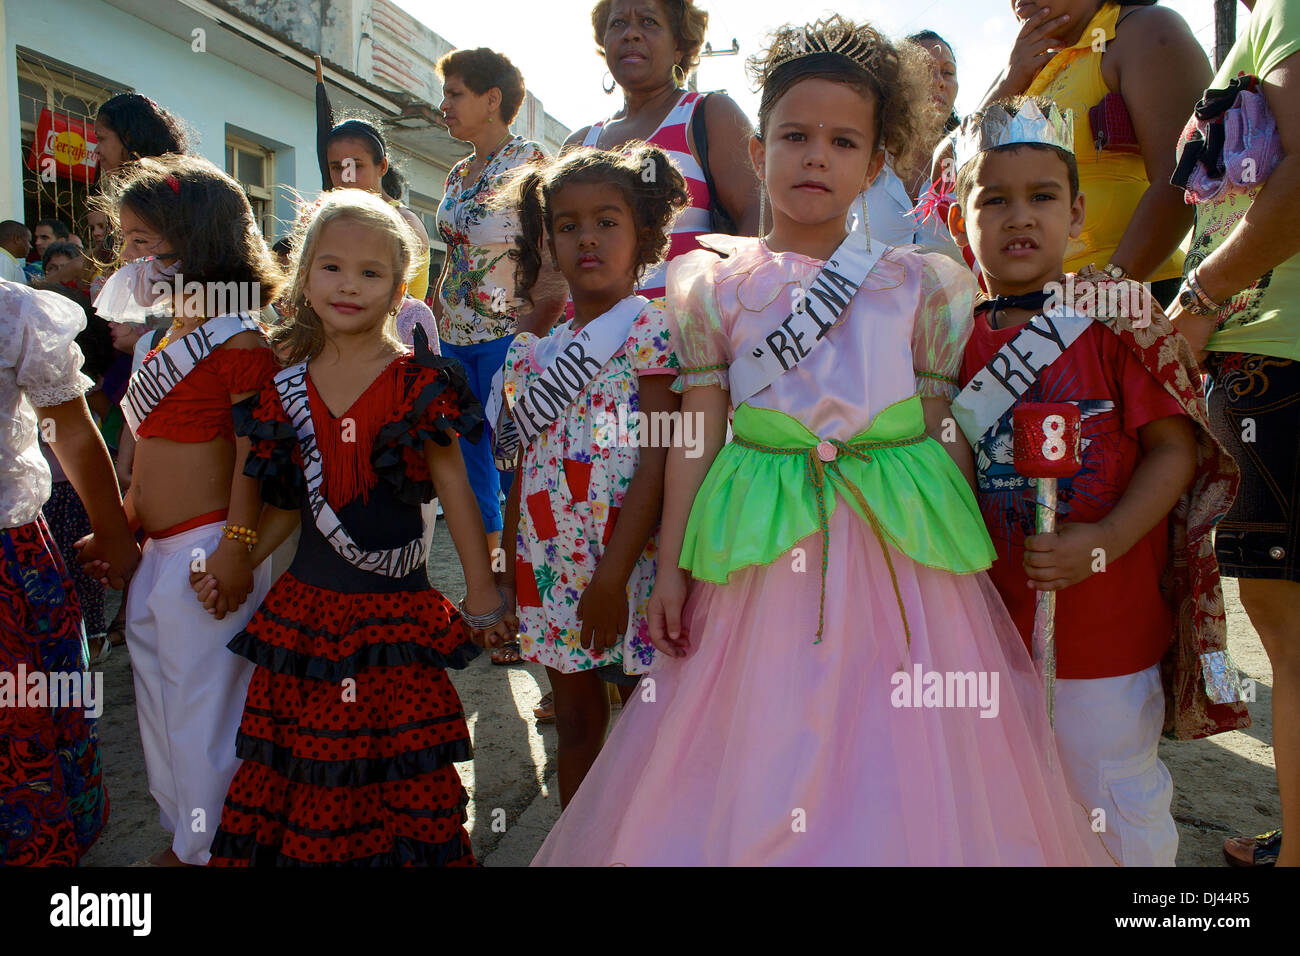 Jose Marti parade, Baracoa, Cuba Foto de stock